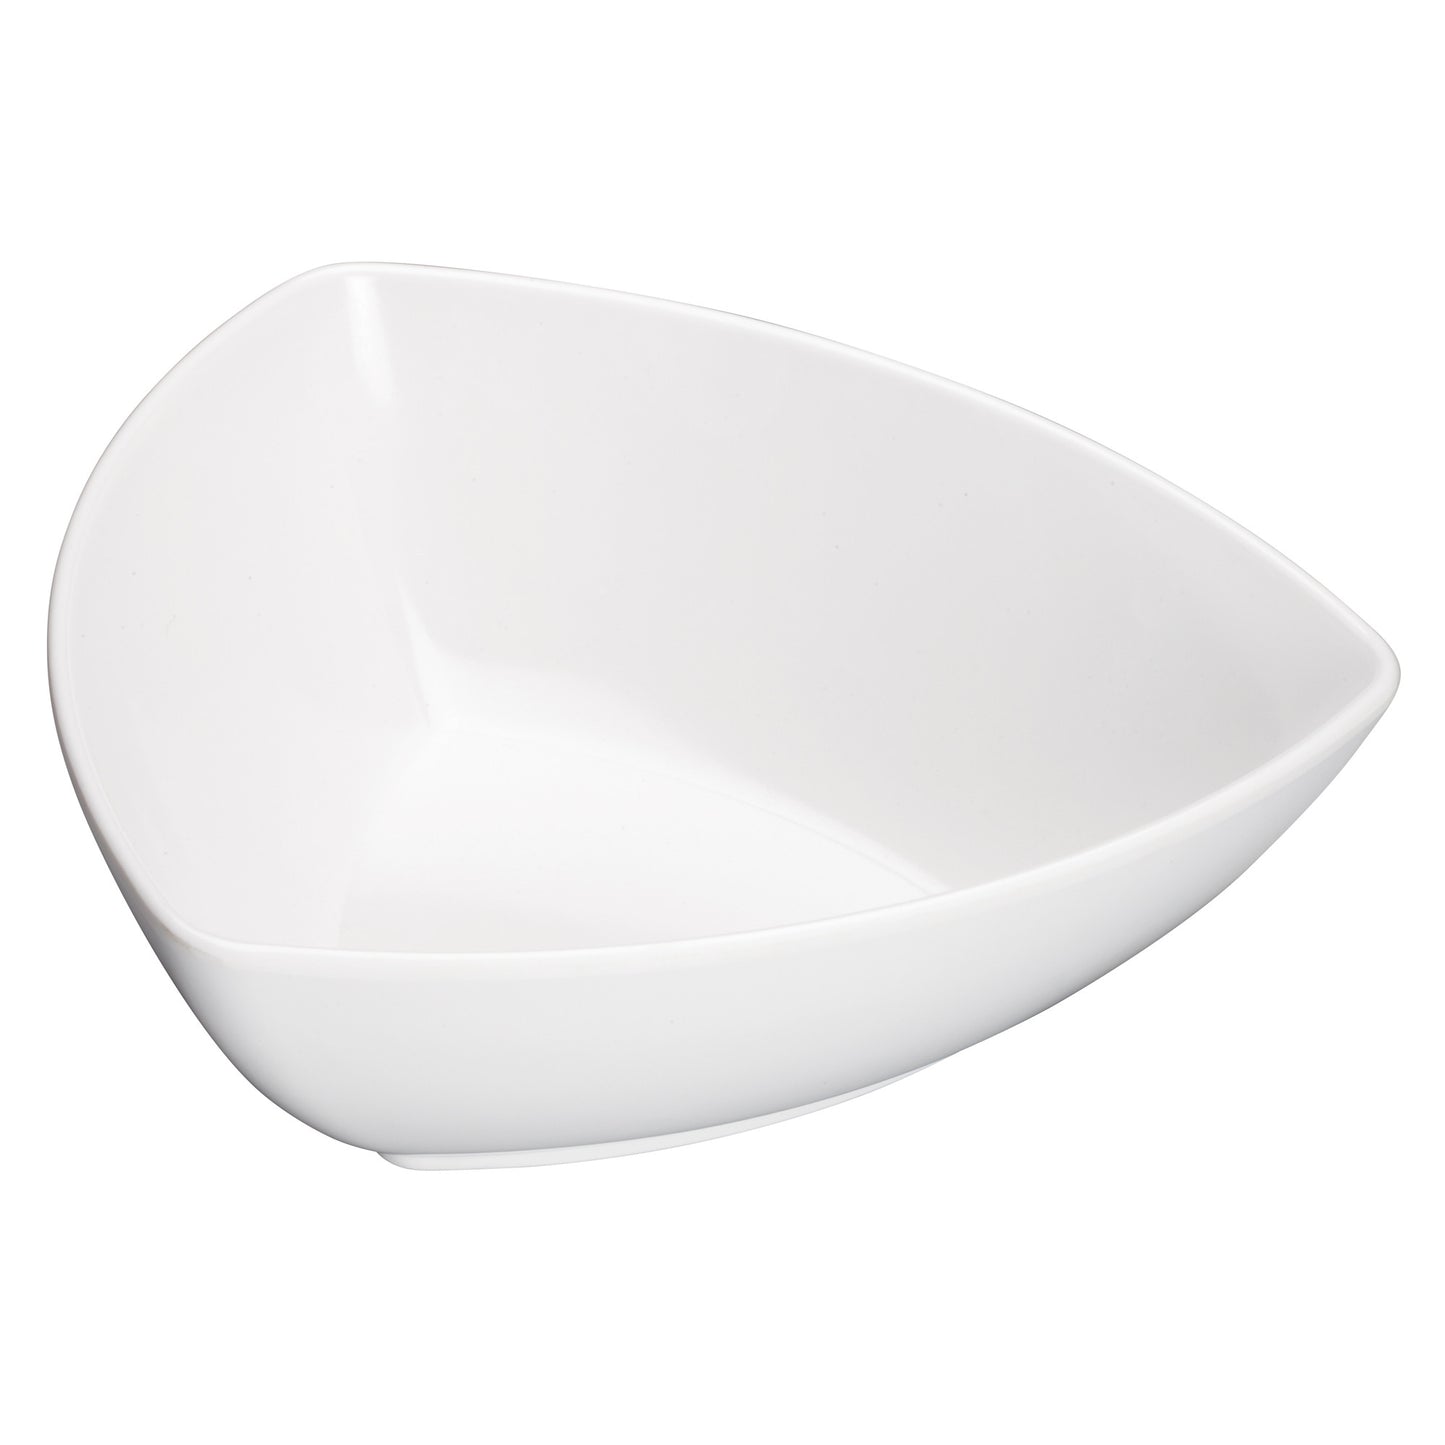 WDM005-203 - 9" Melamine Triangular Bowl, White, 24pcs/case